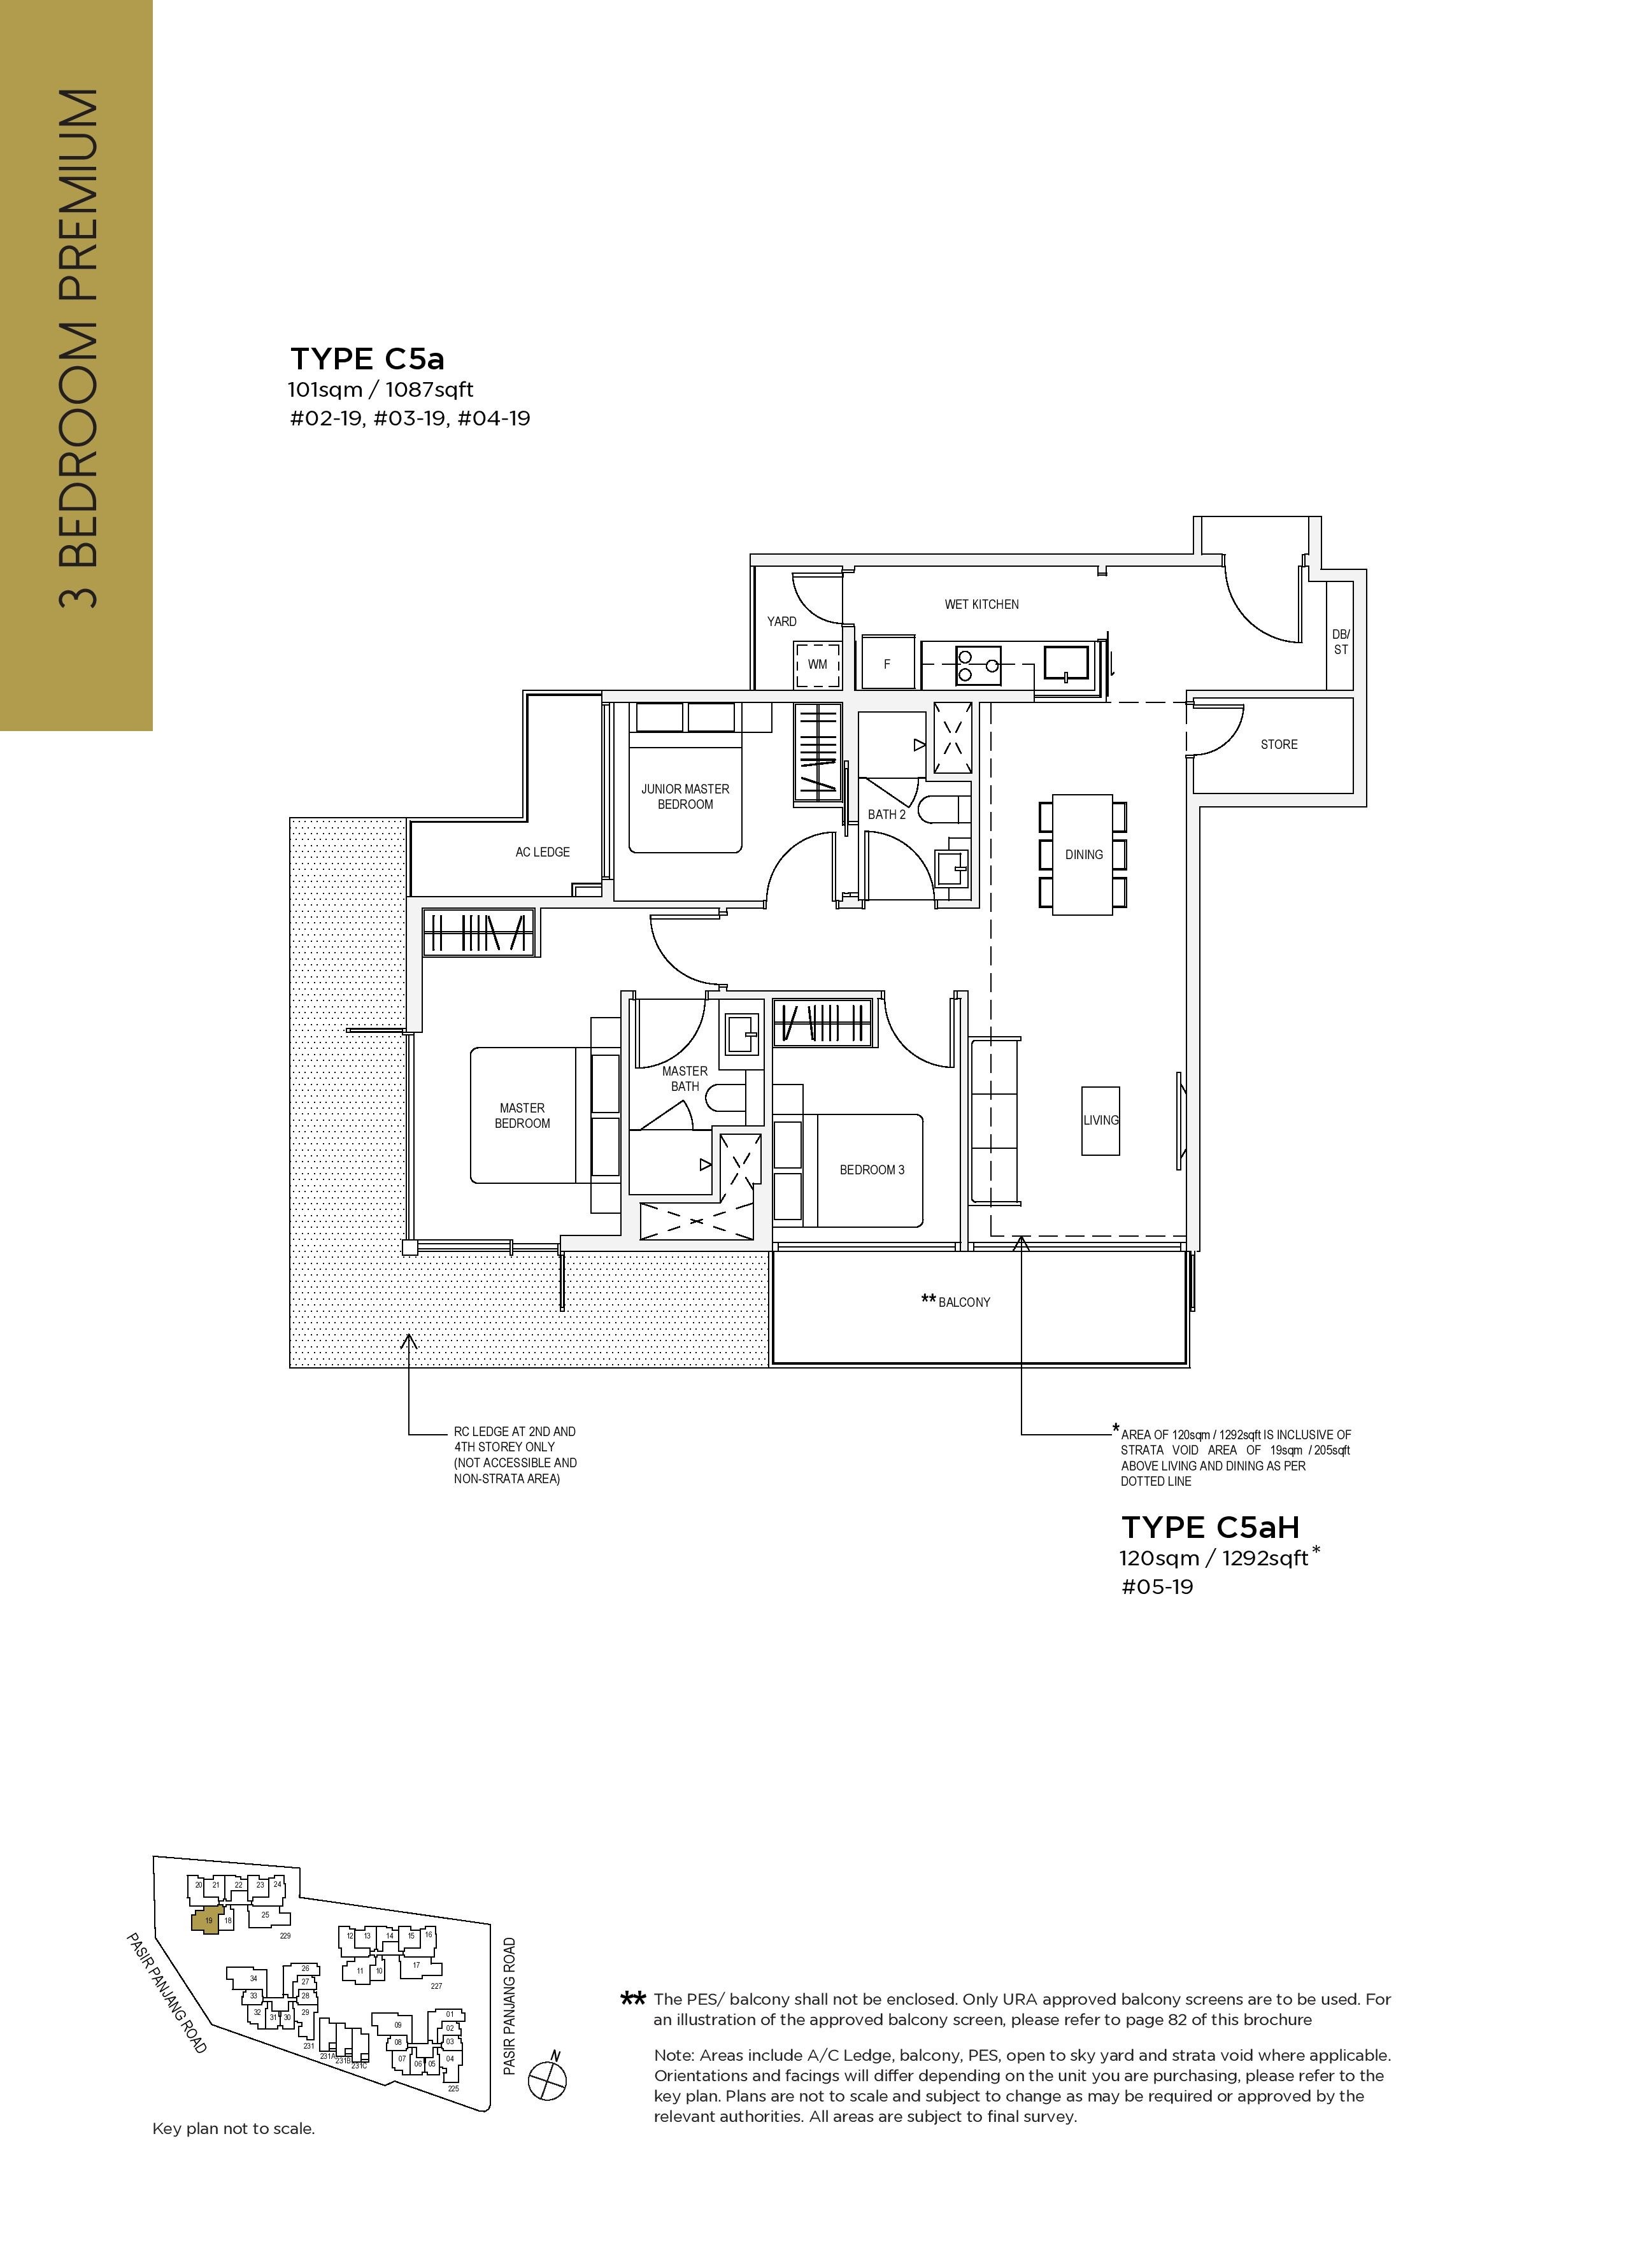 The Verandah Residences 3 Bedroom Floor Plans Type C5a, C5aH